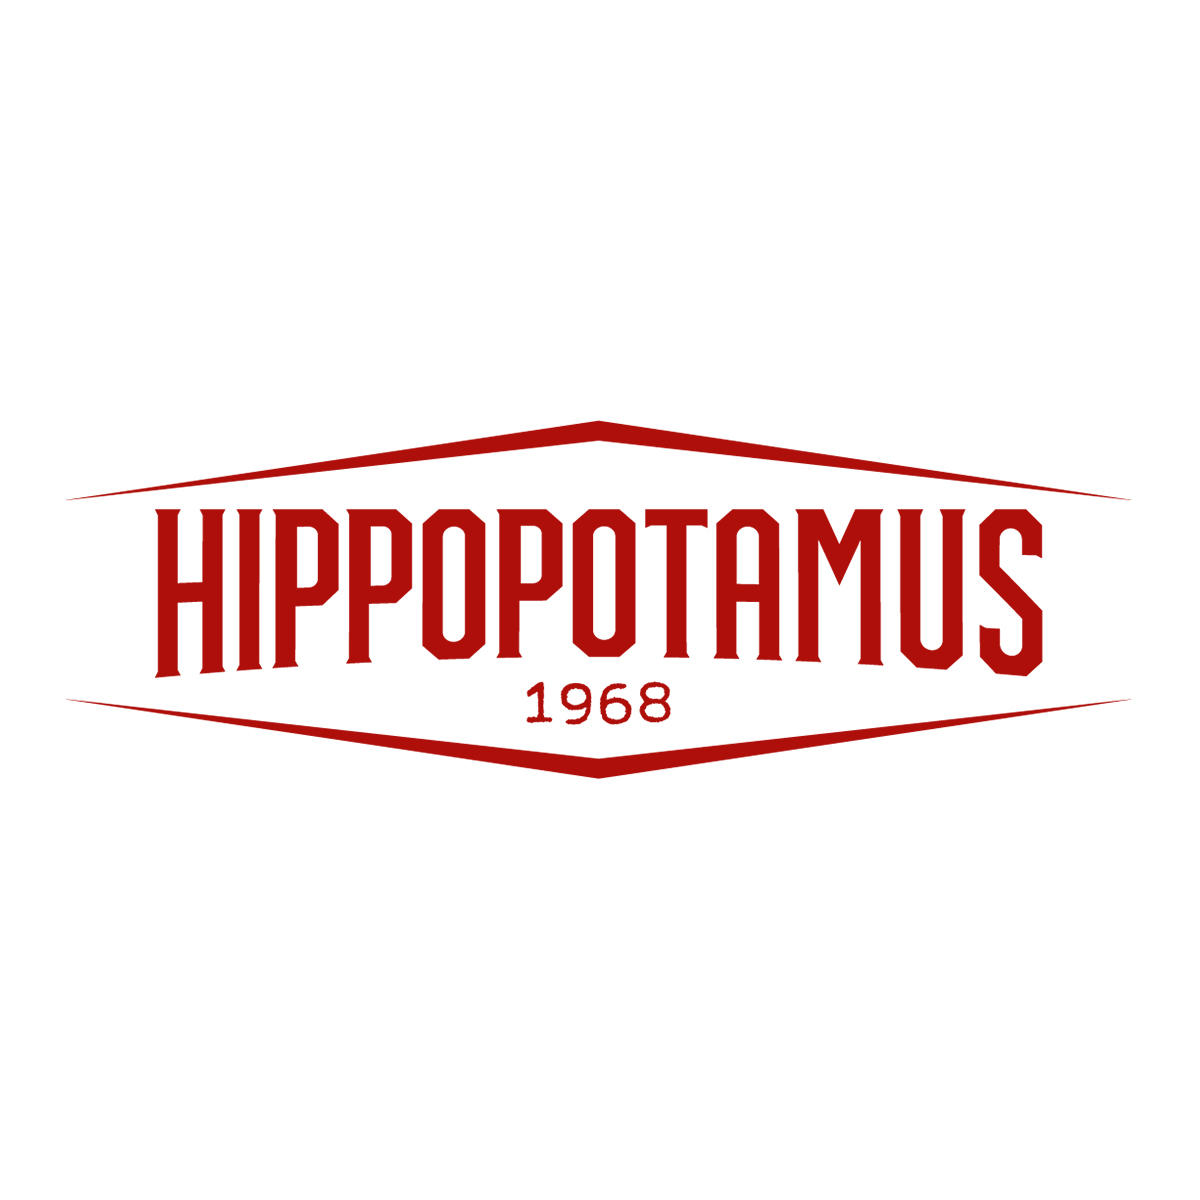 Hippopotamus Steakhouse restaurant